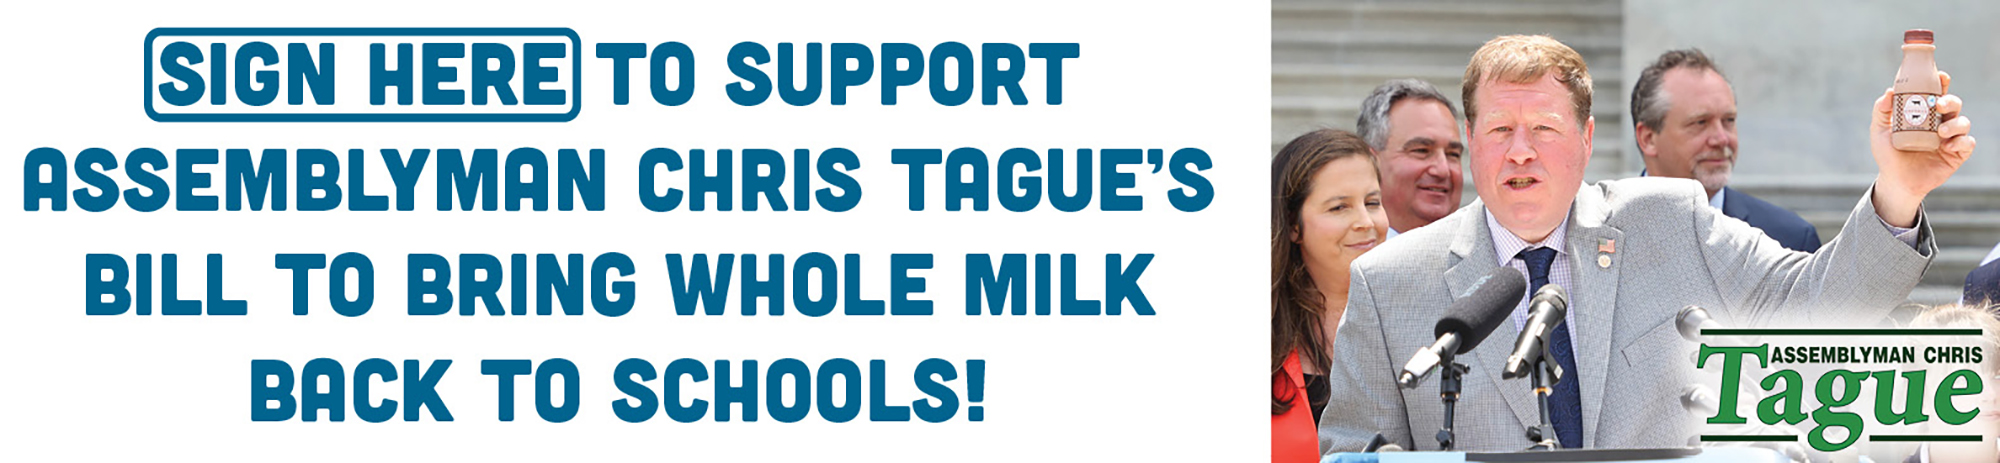 School Milk Petition